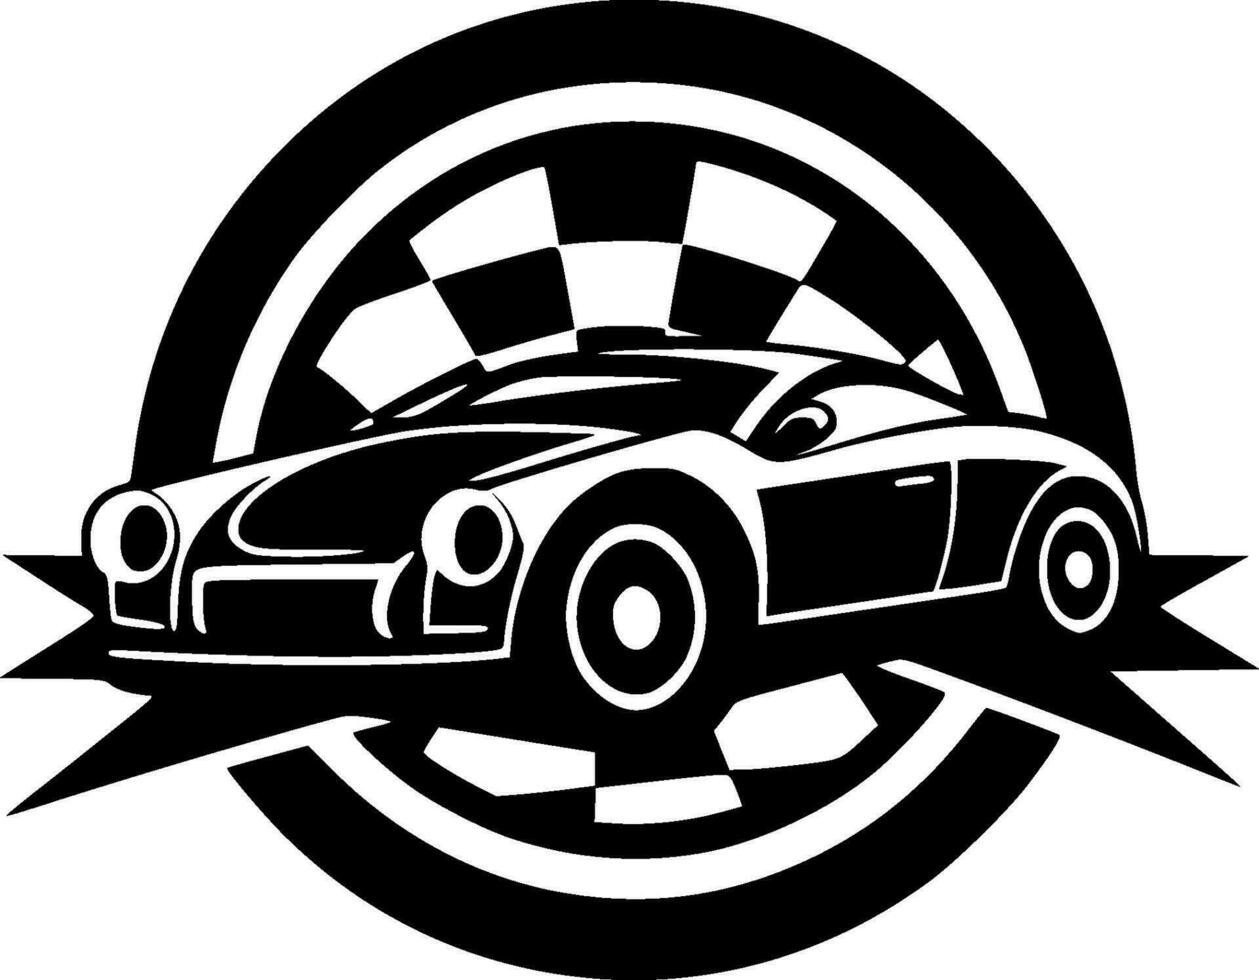 Racing - Minimalist and Flat Logo - Vector illustration